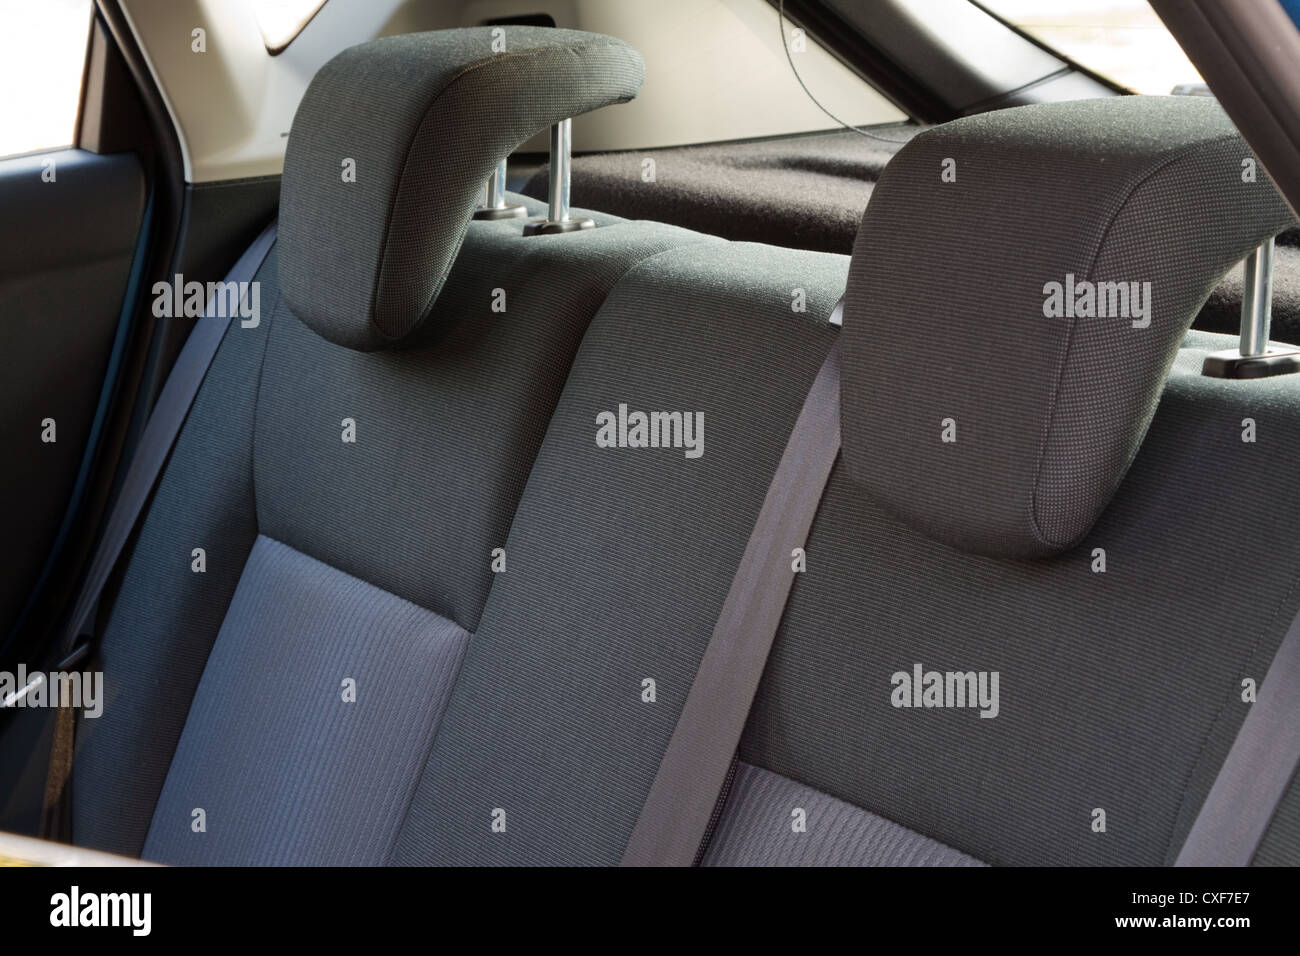 Car interior - back car seats with active headrest Stock Photo